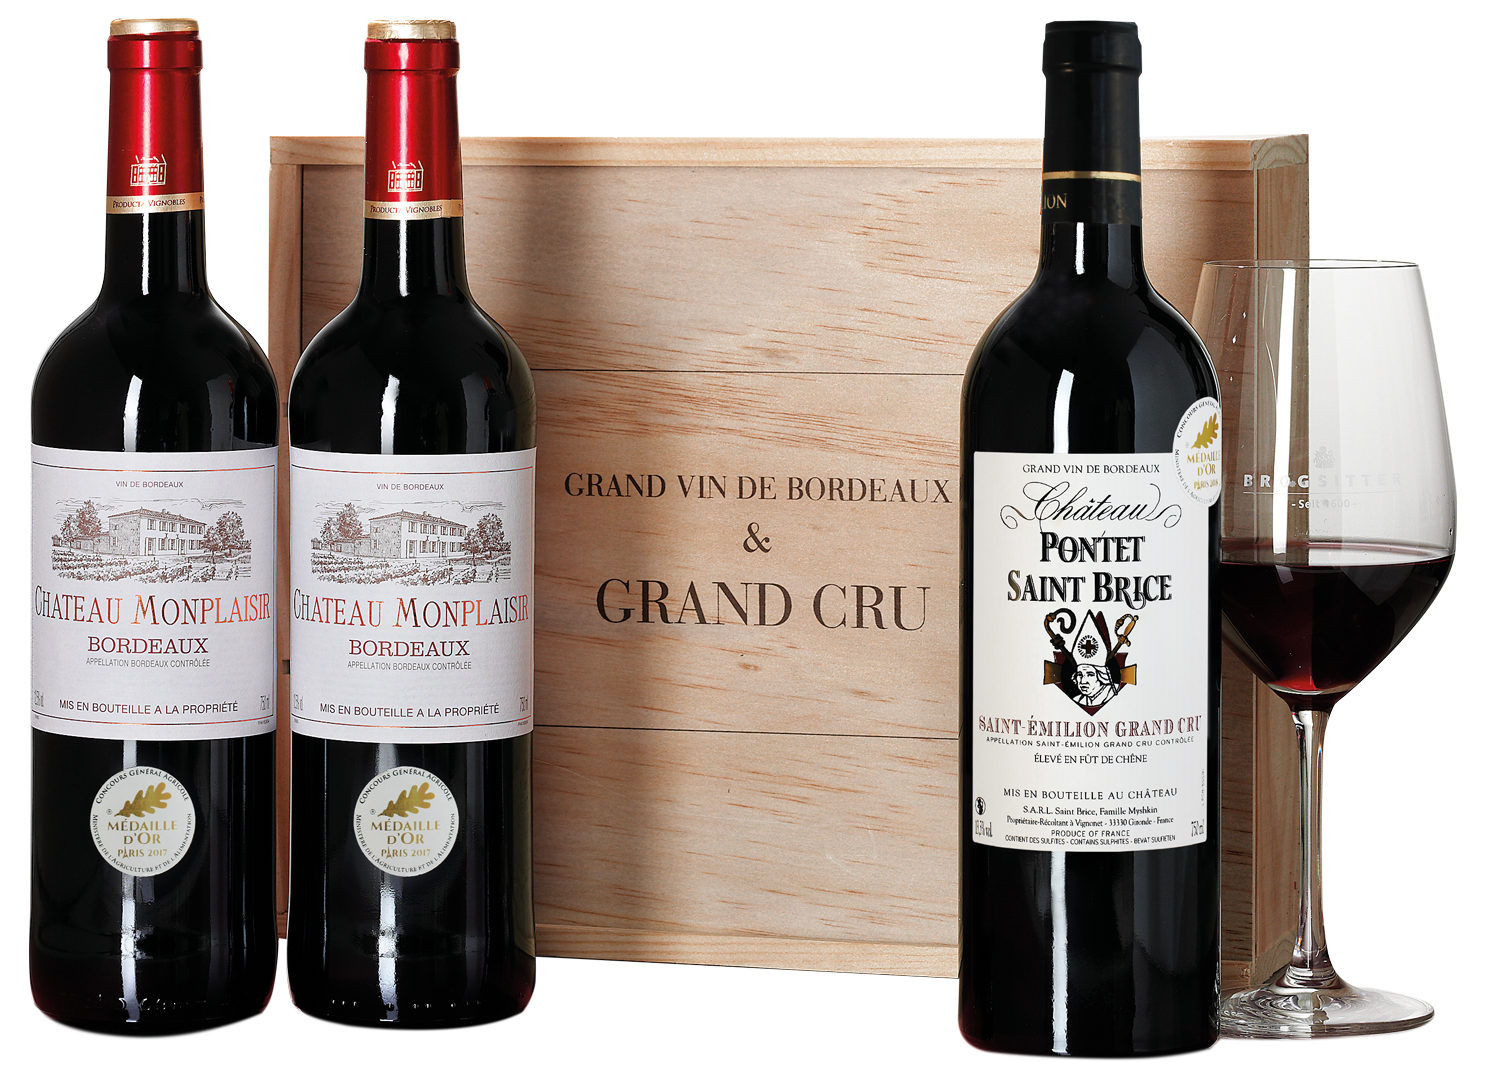 Grand vin de. Grand Cru Bordeaux. Haut Pontet St-Emilion Grand Cru. VIN de Bordeaux Bordeaux. Шато де Сеген бордо вино 2015 Гранд вин.